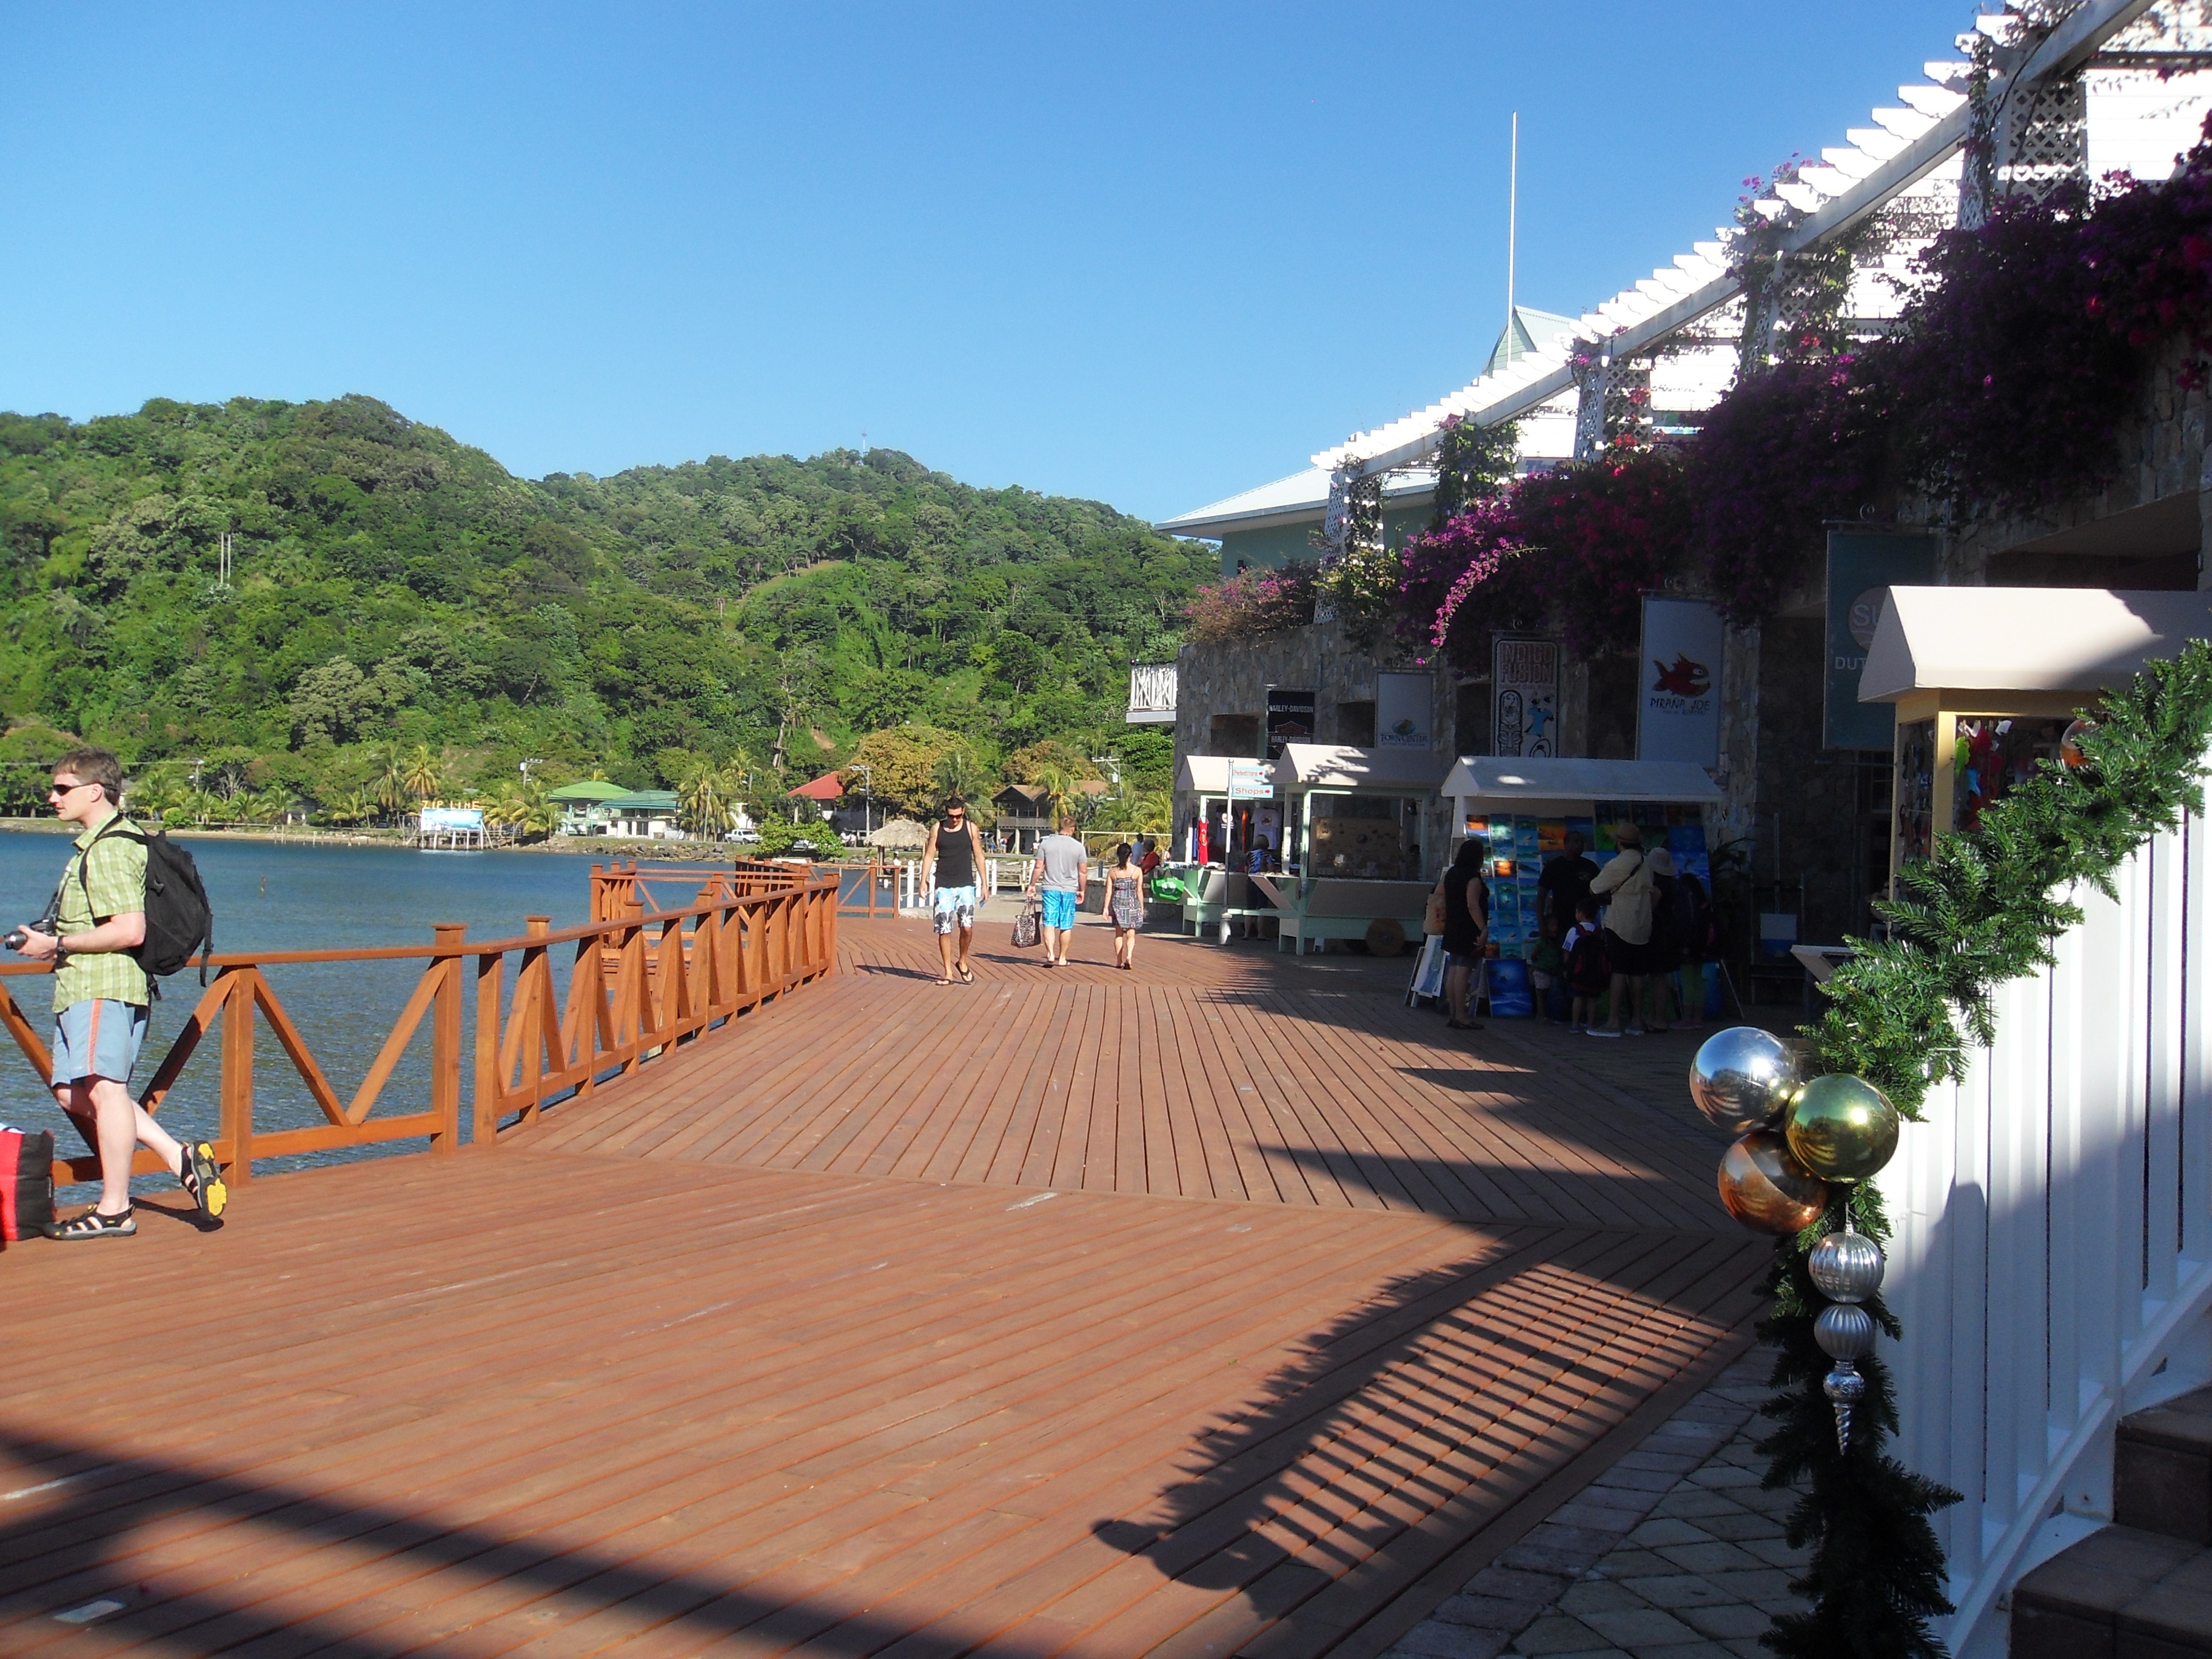 More shops along the harbor, Bay Islands, Honduras